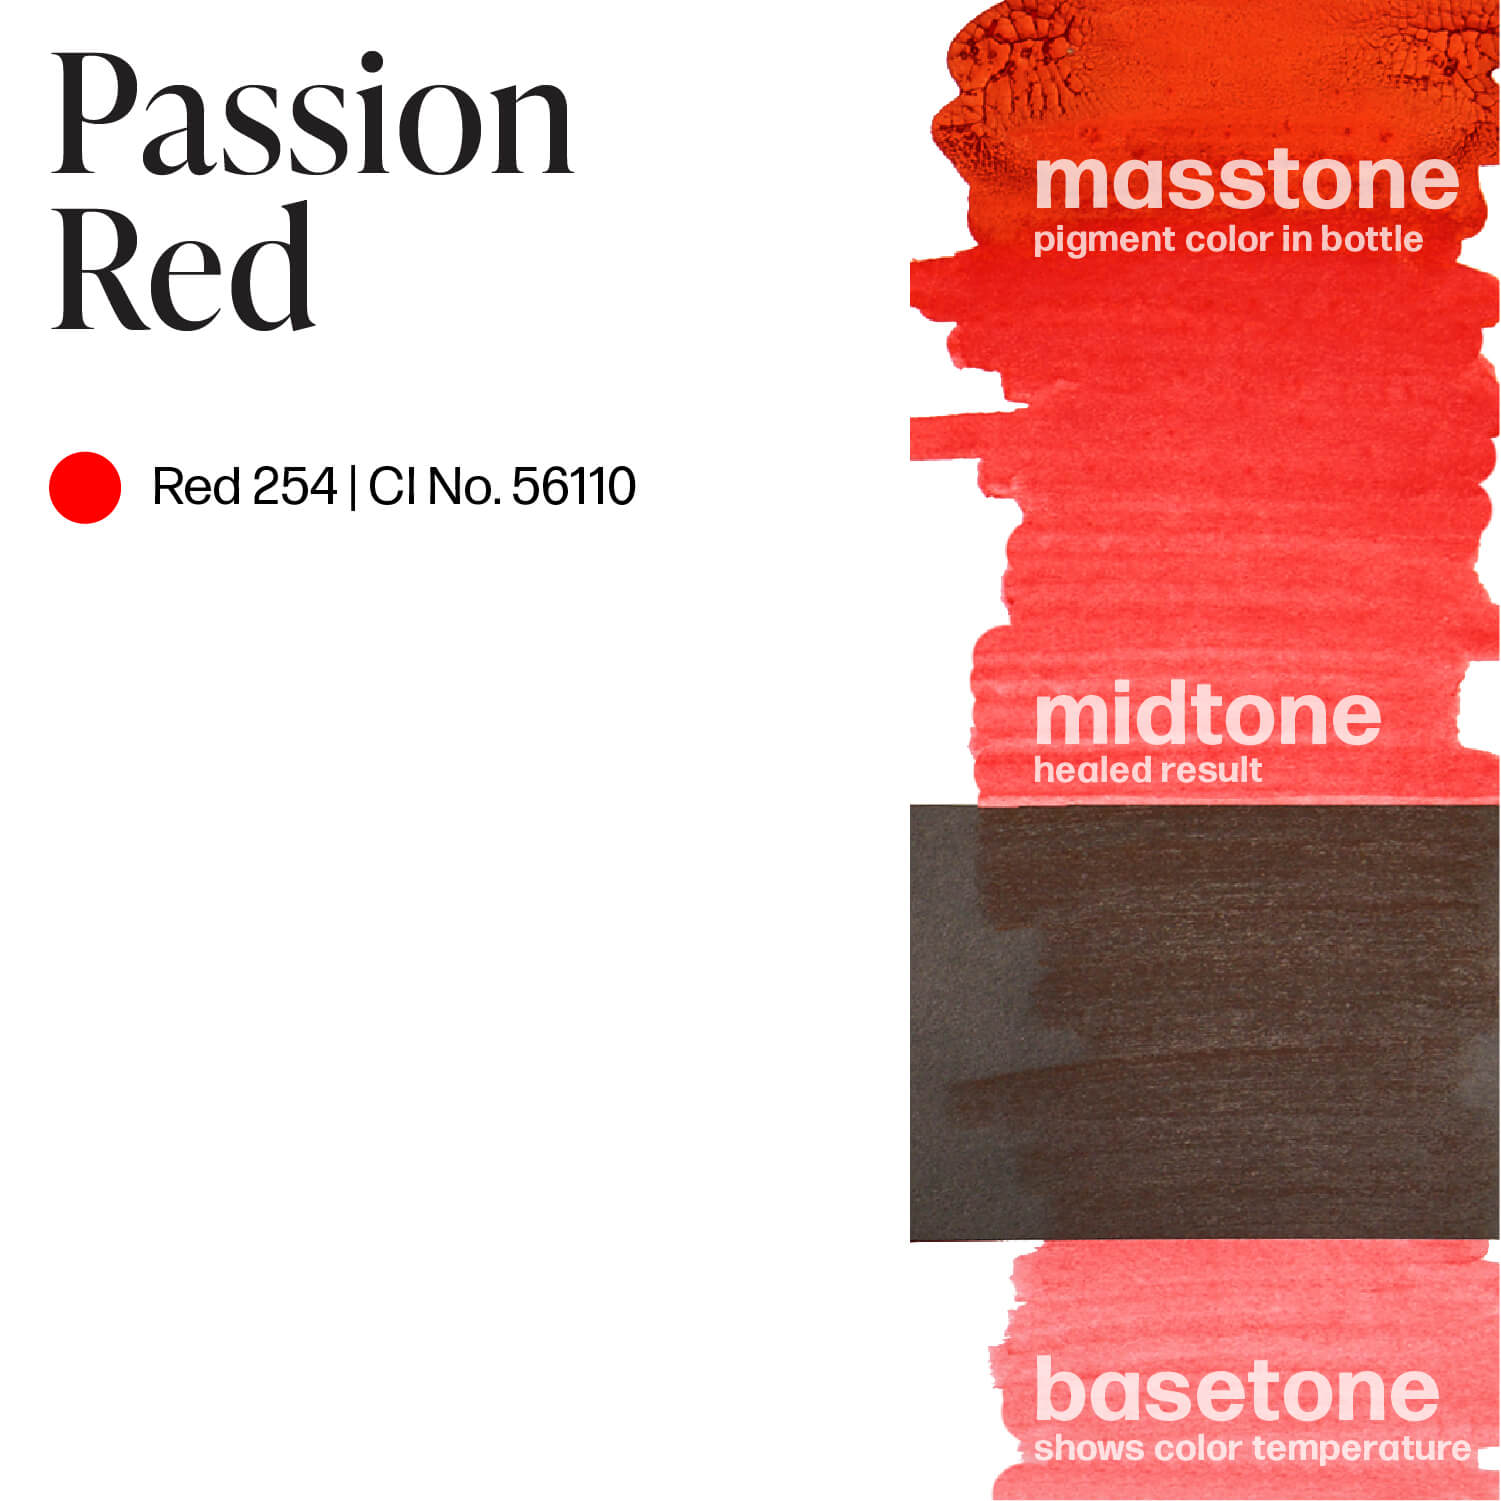 Perma Blend Passion Red Lip Blush Ink Drawdown Masstone Midtone Basetone